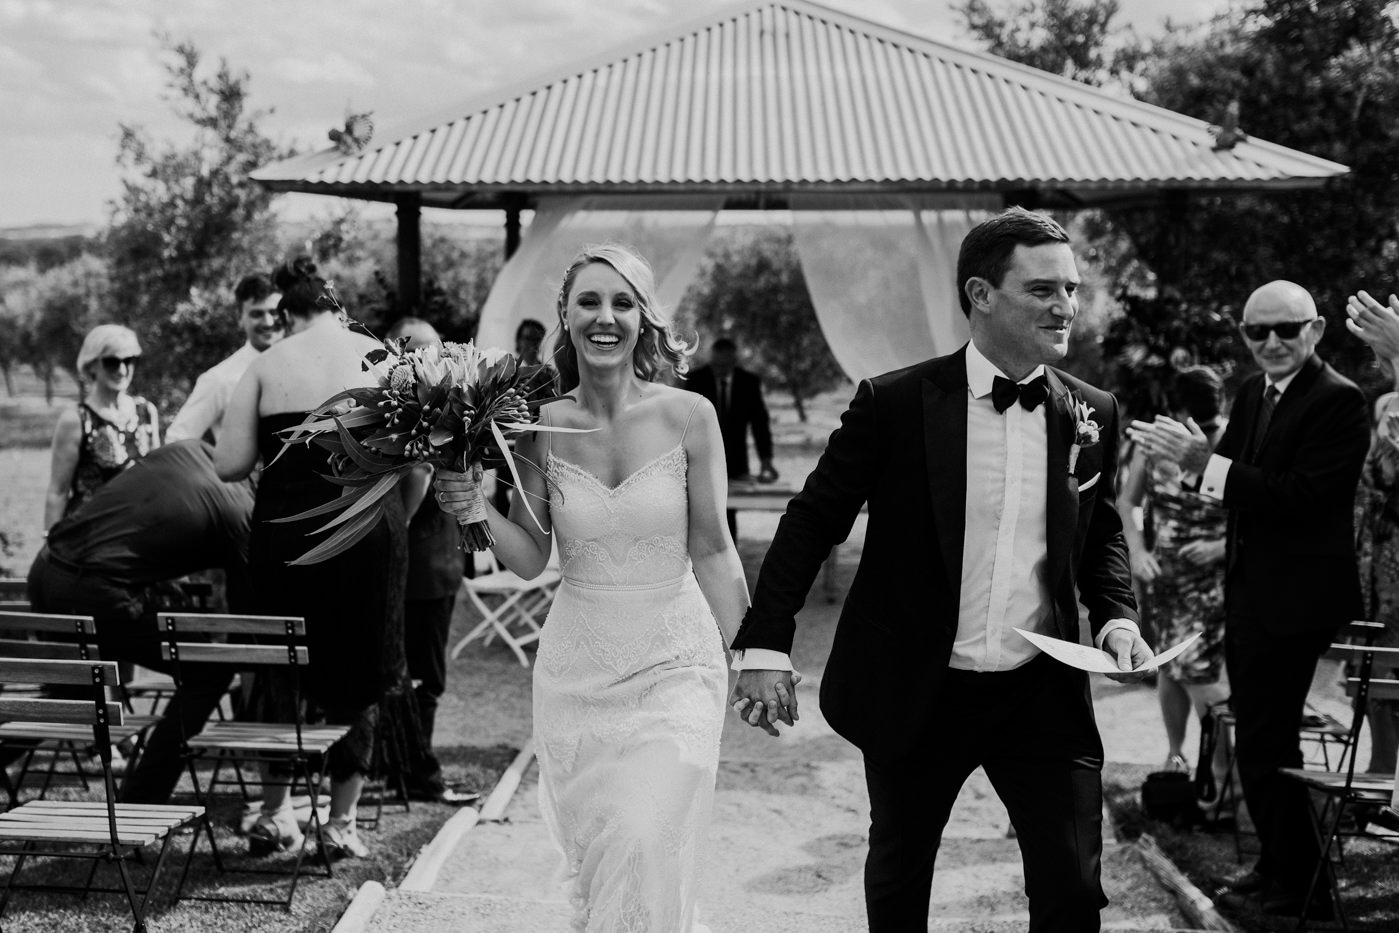 Anthony & Eliet - Wagga Wagga Wedding - Country NSW - Samantha Heather Photography-111.jpg